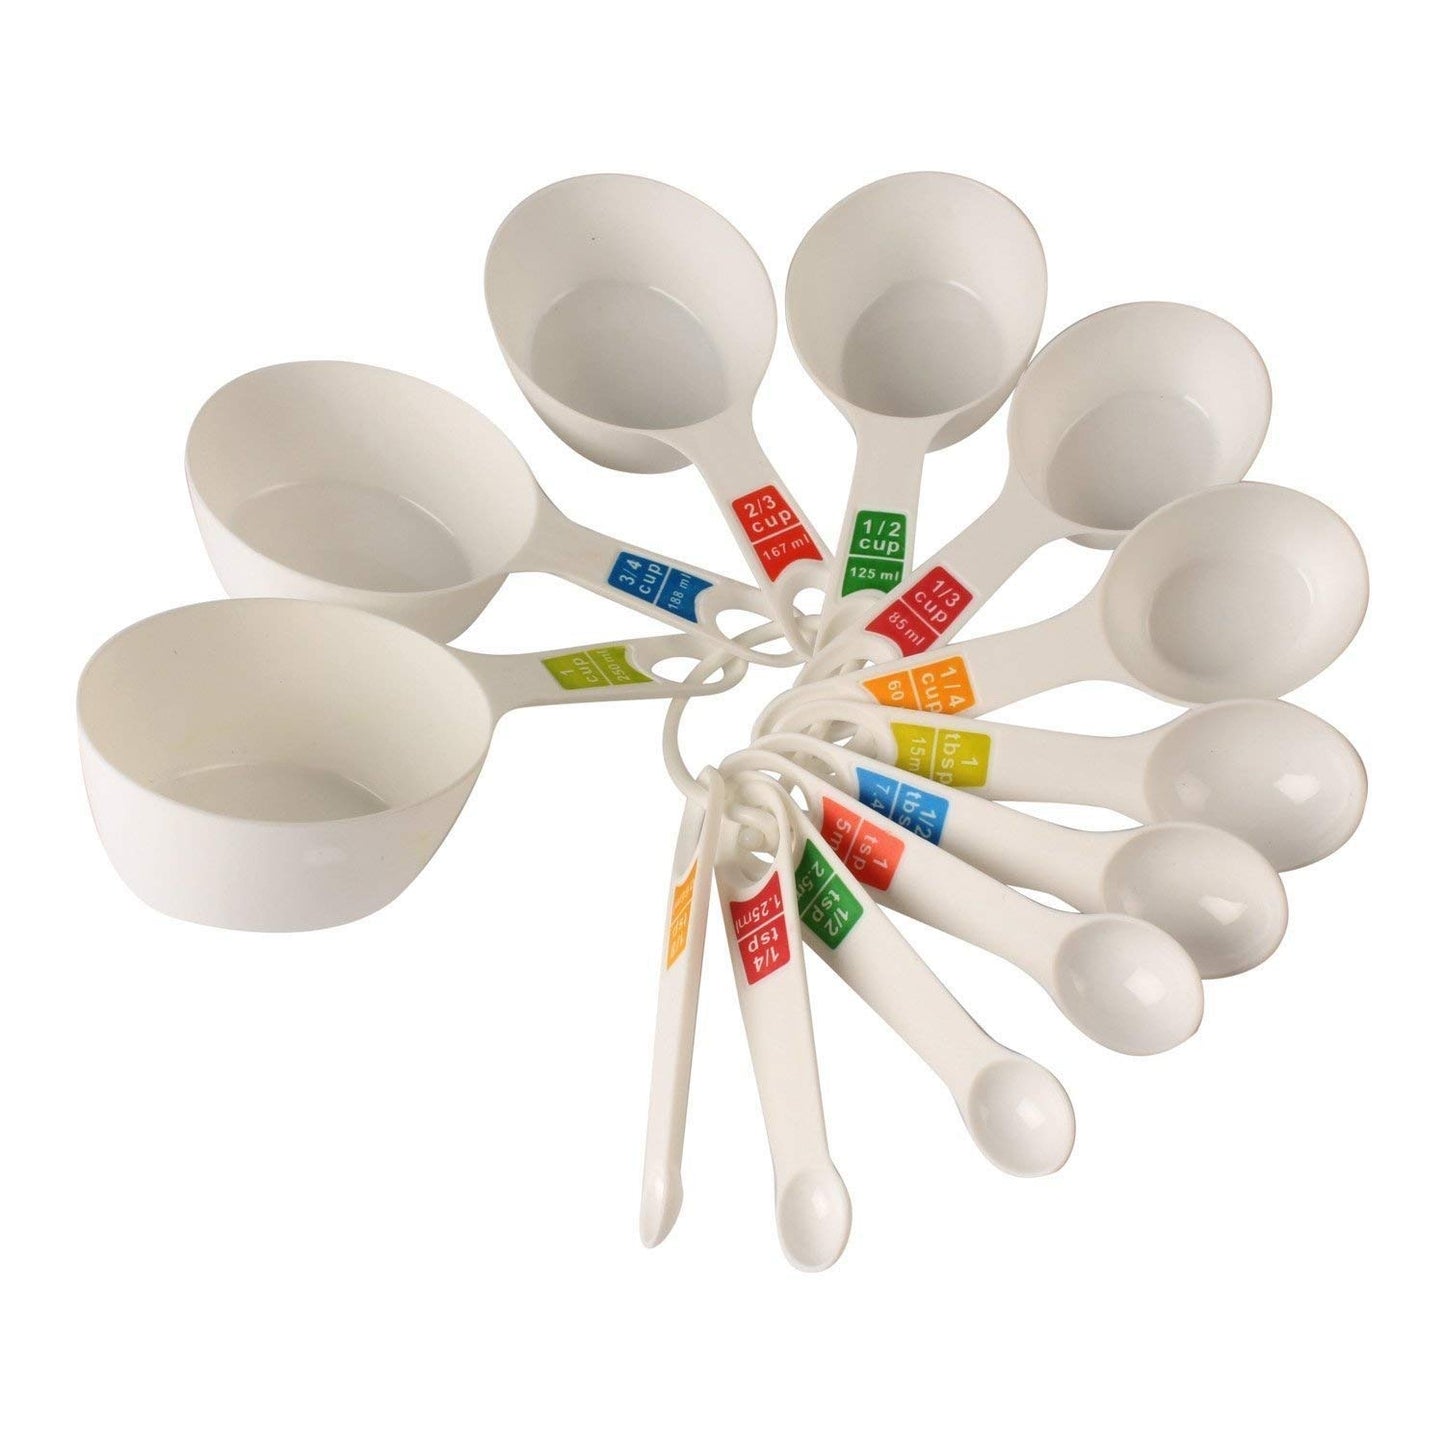 Measuring Cups & Spoons 12Pcs Set Plastic